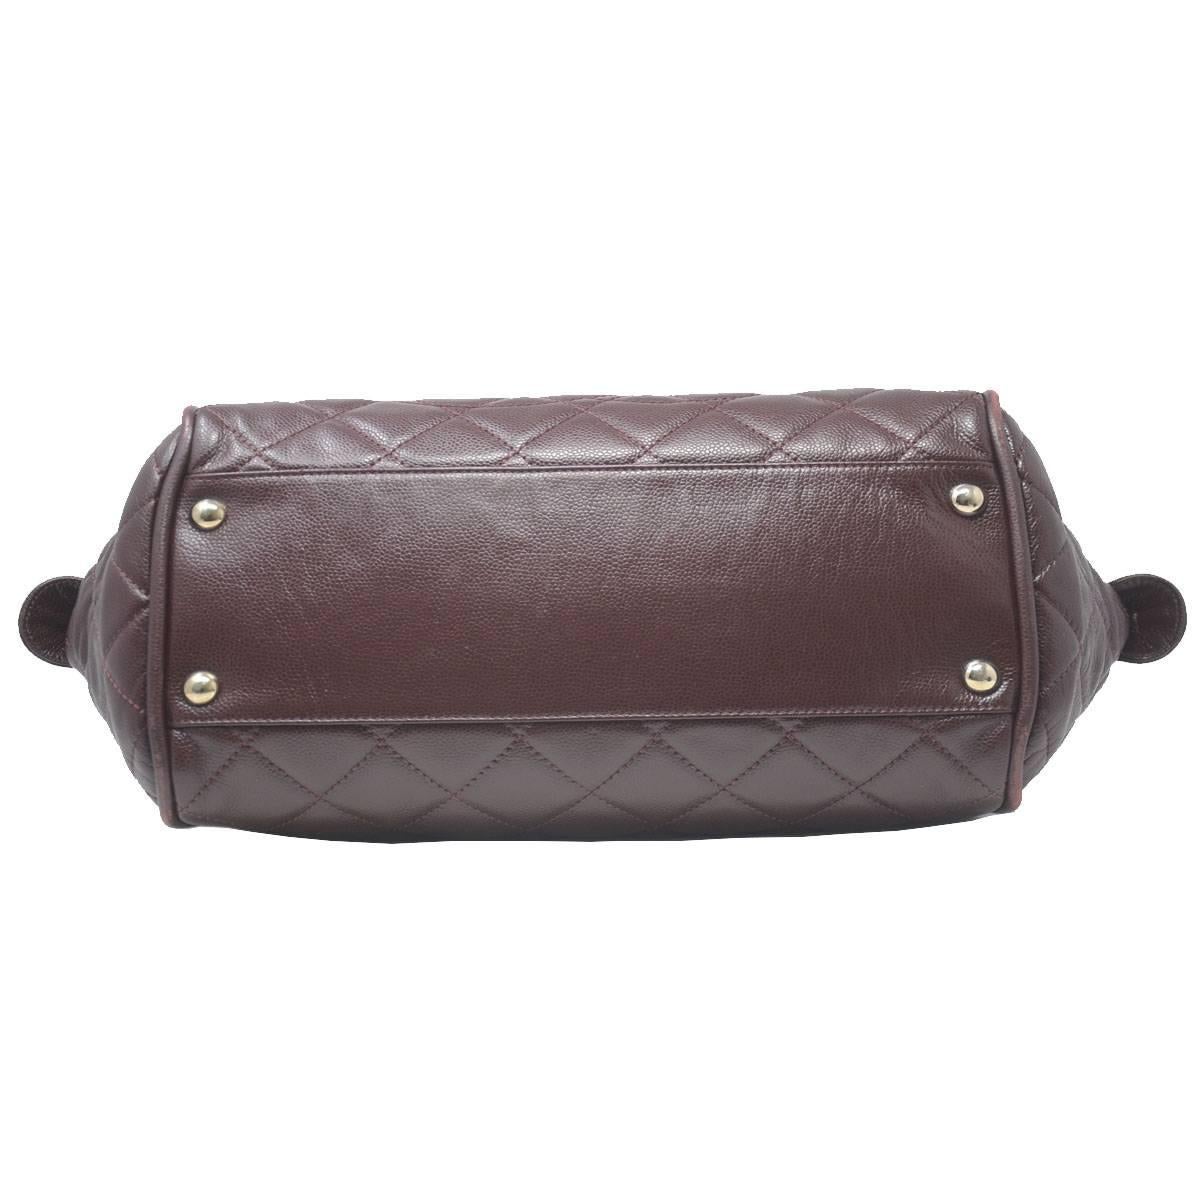 Gray Chanel Burgundy Large Satchel Handbag